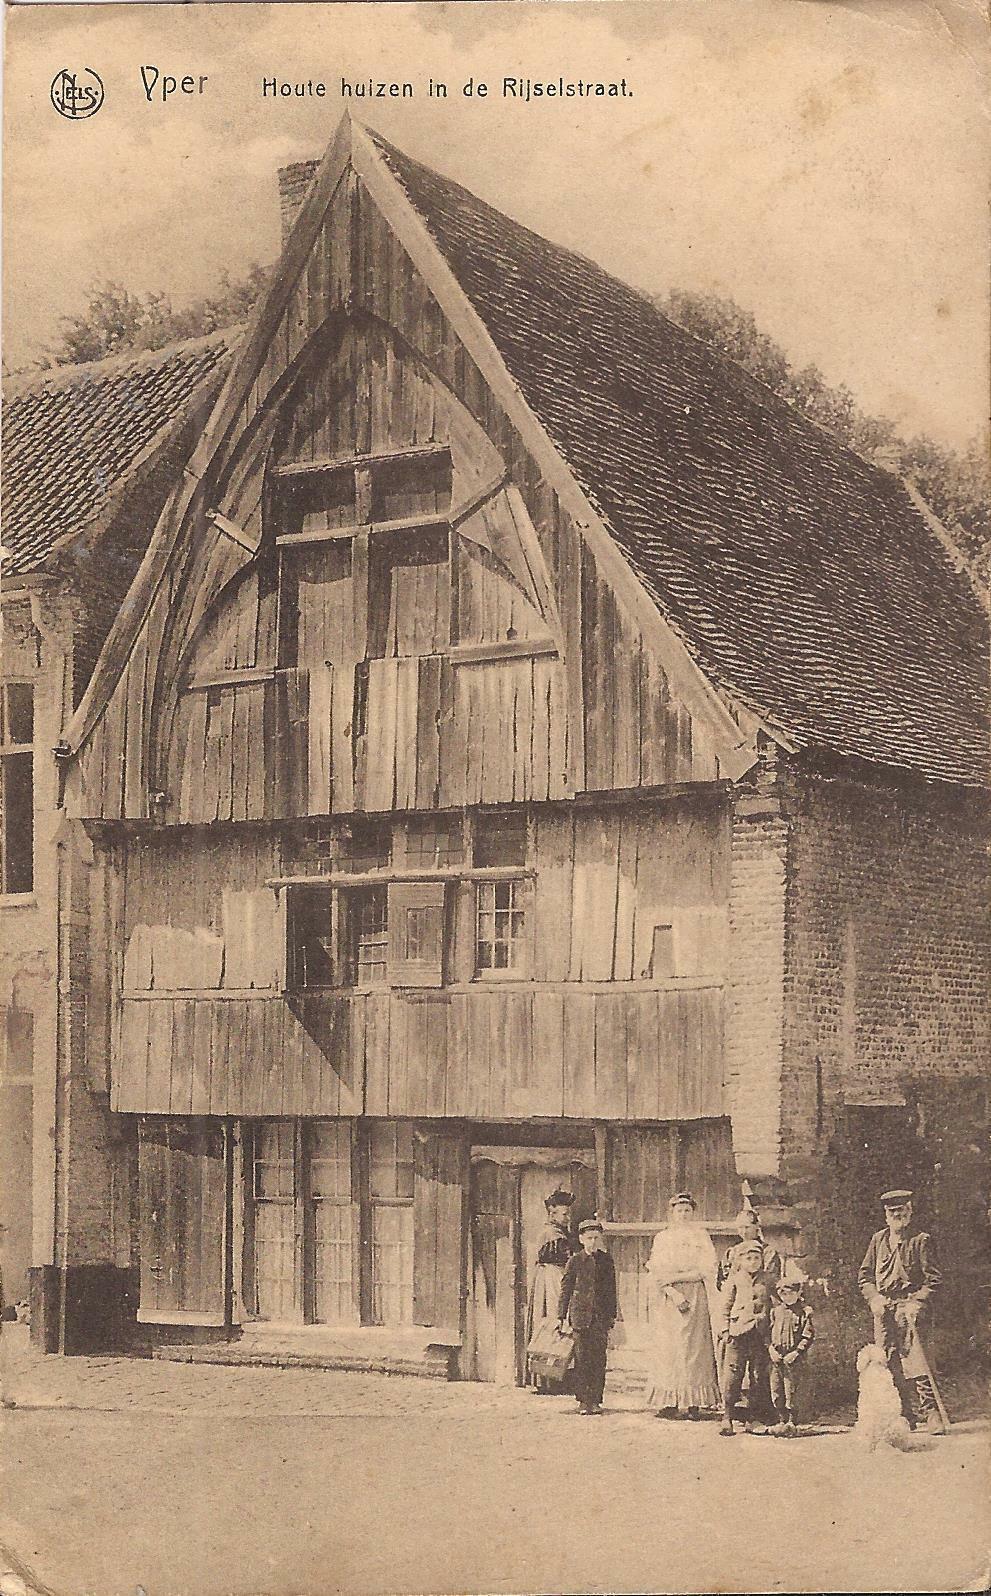 Yper, BELGIUM - High House on Rijelstraat - 1928 - priest, children, old man